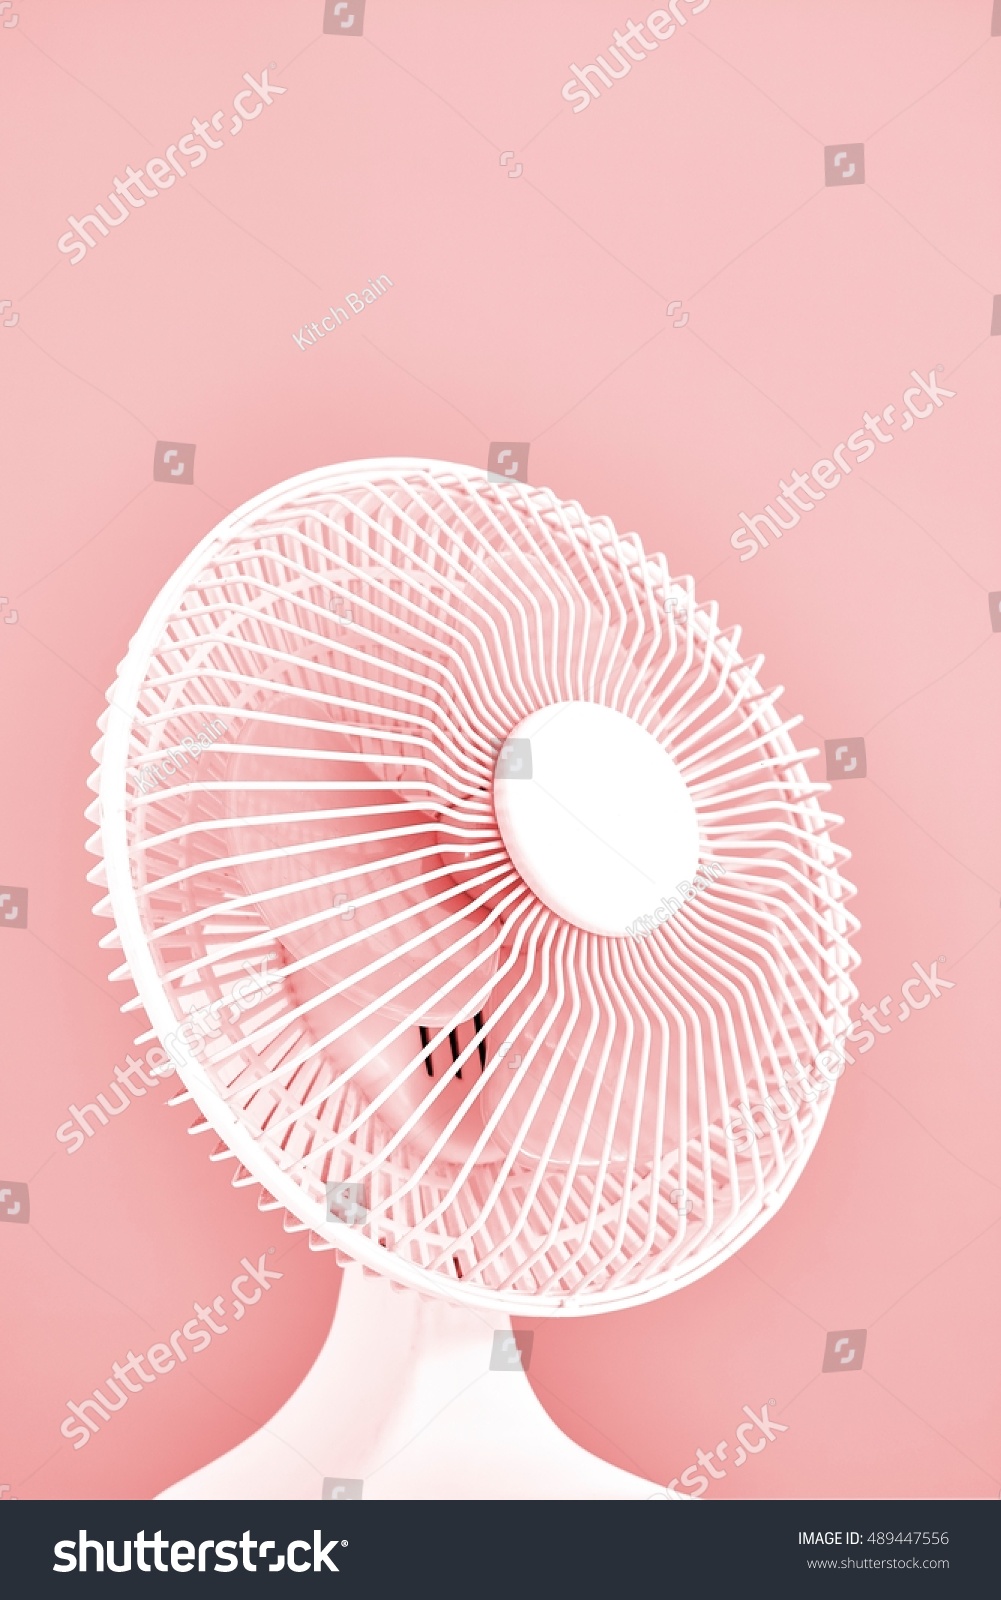 A studio photo of a portable electric fan #489447556